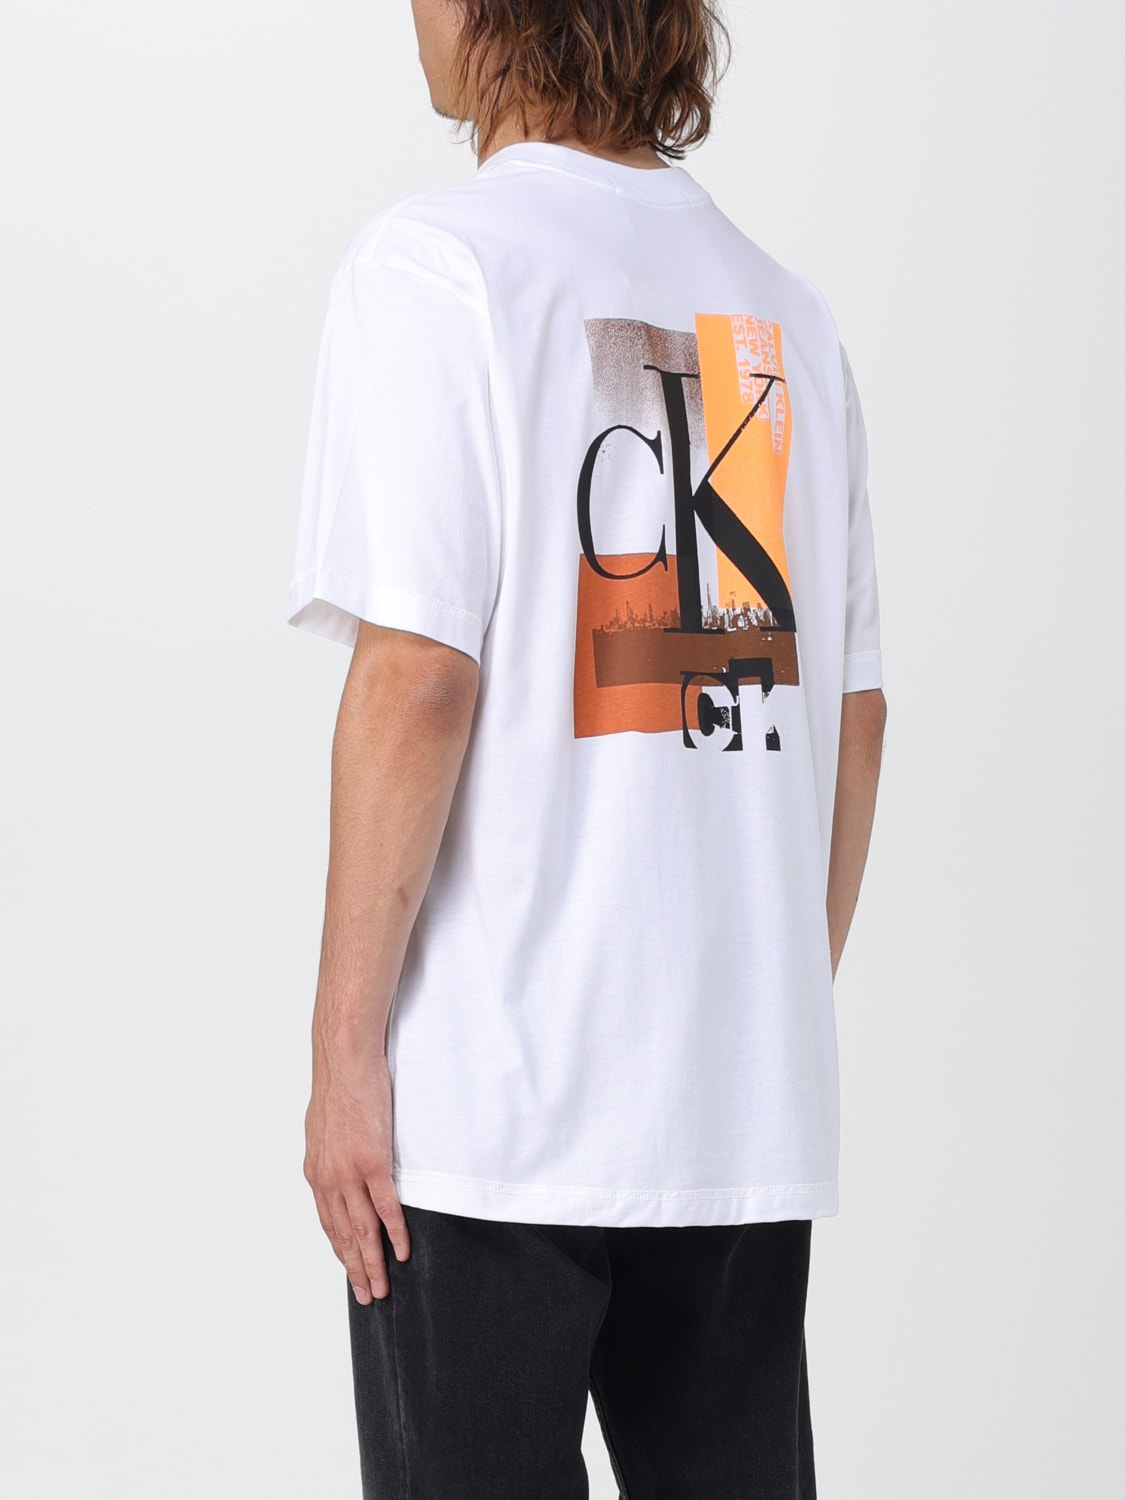 CALVIN KLEIN JEANS: t-shirt for man - White | Calvin Klein Jeans t-shirt  J30J324021 online at